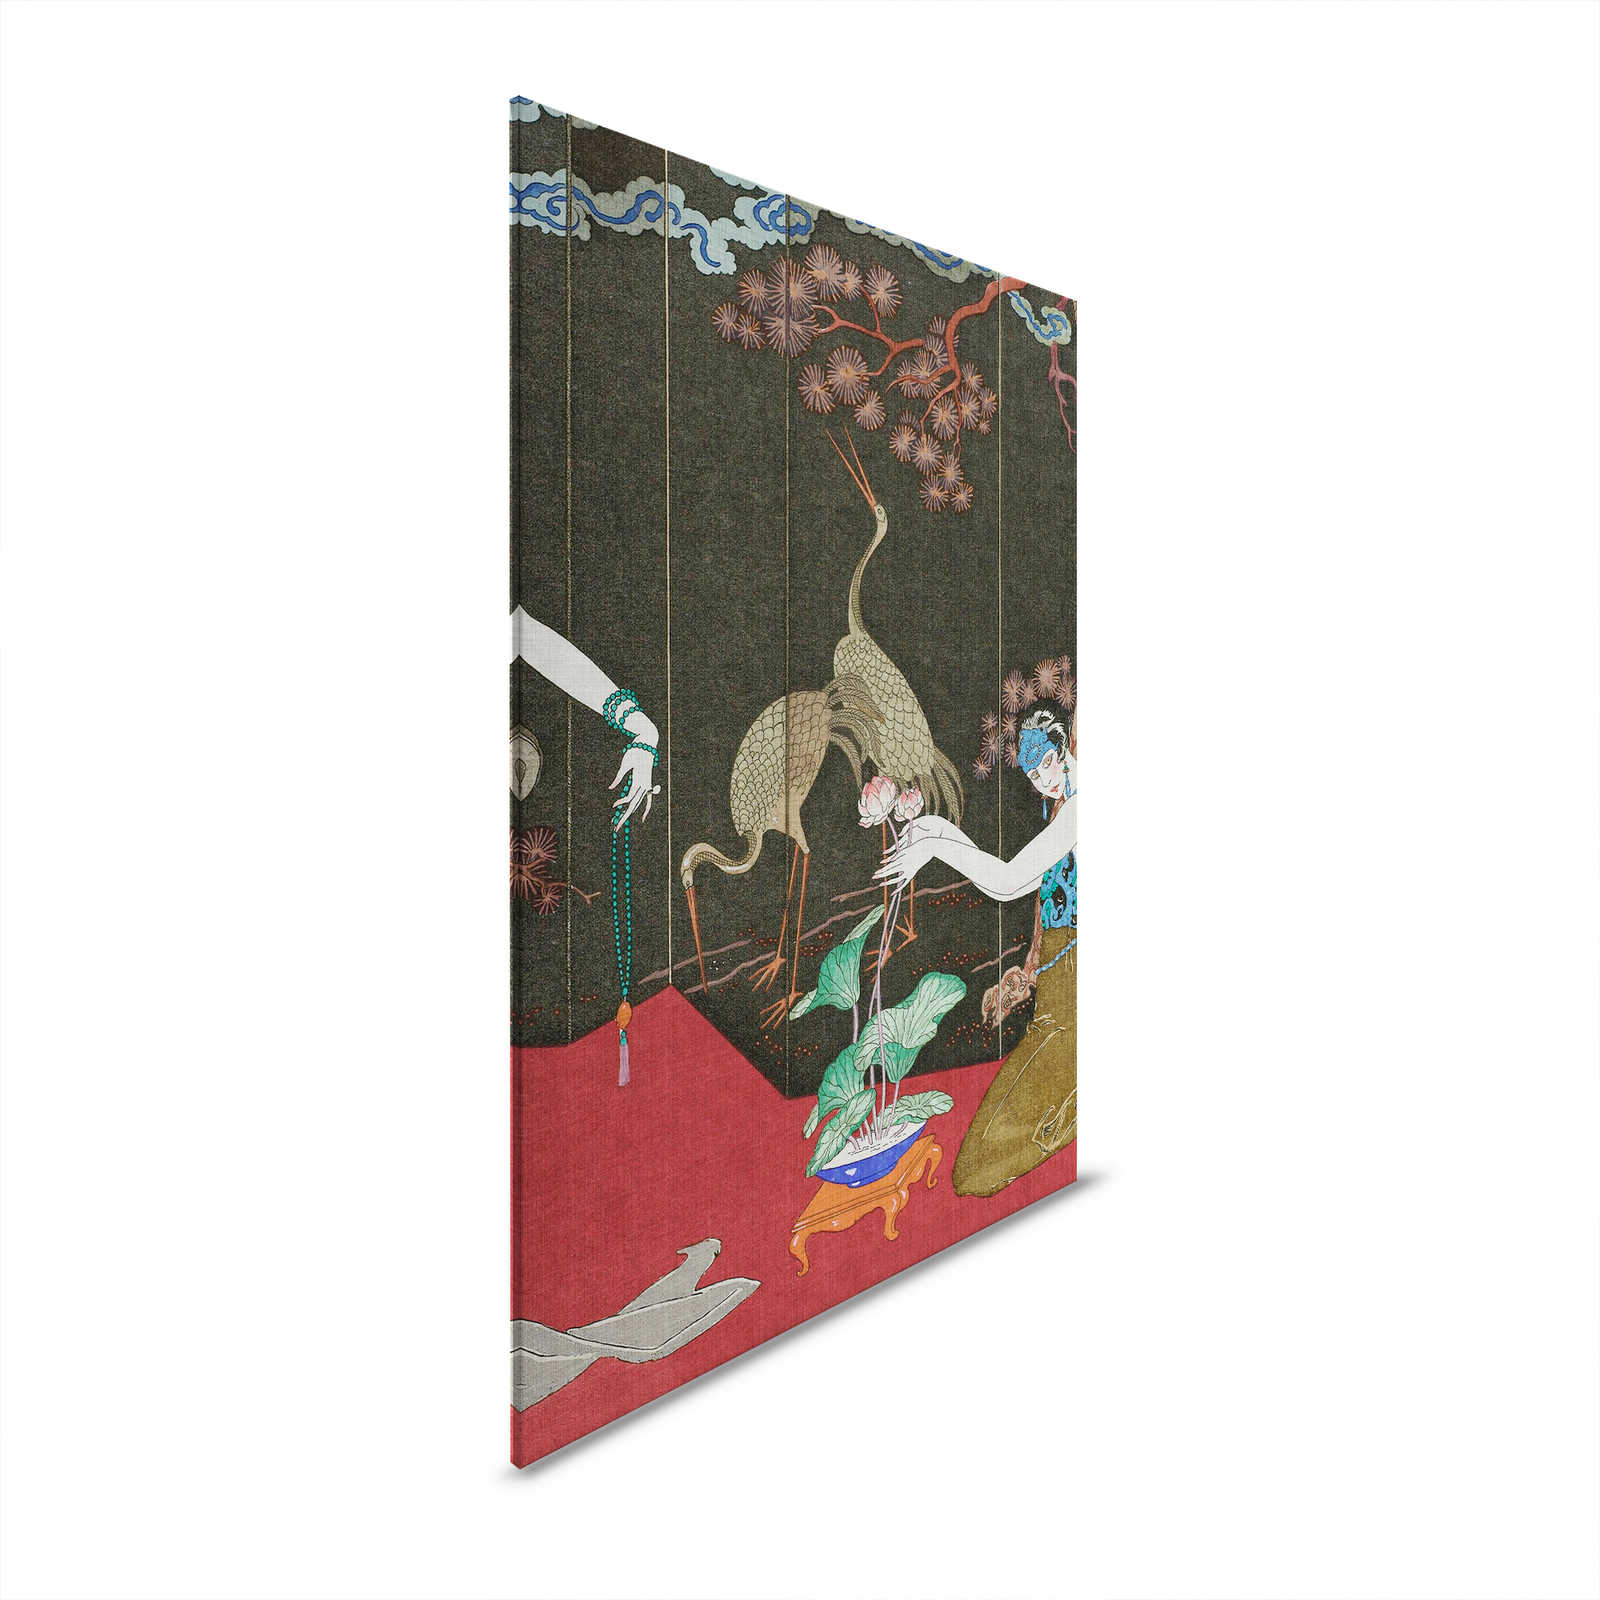 Babylon 1 - Stampa su tela di ispirazione asiatica classica - 1,20 m x 0,80 m
